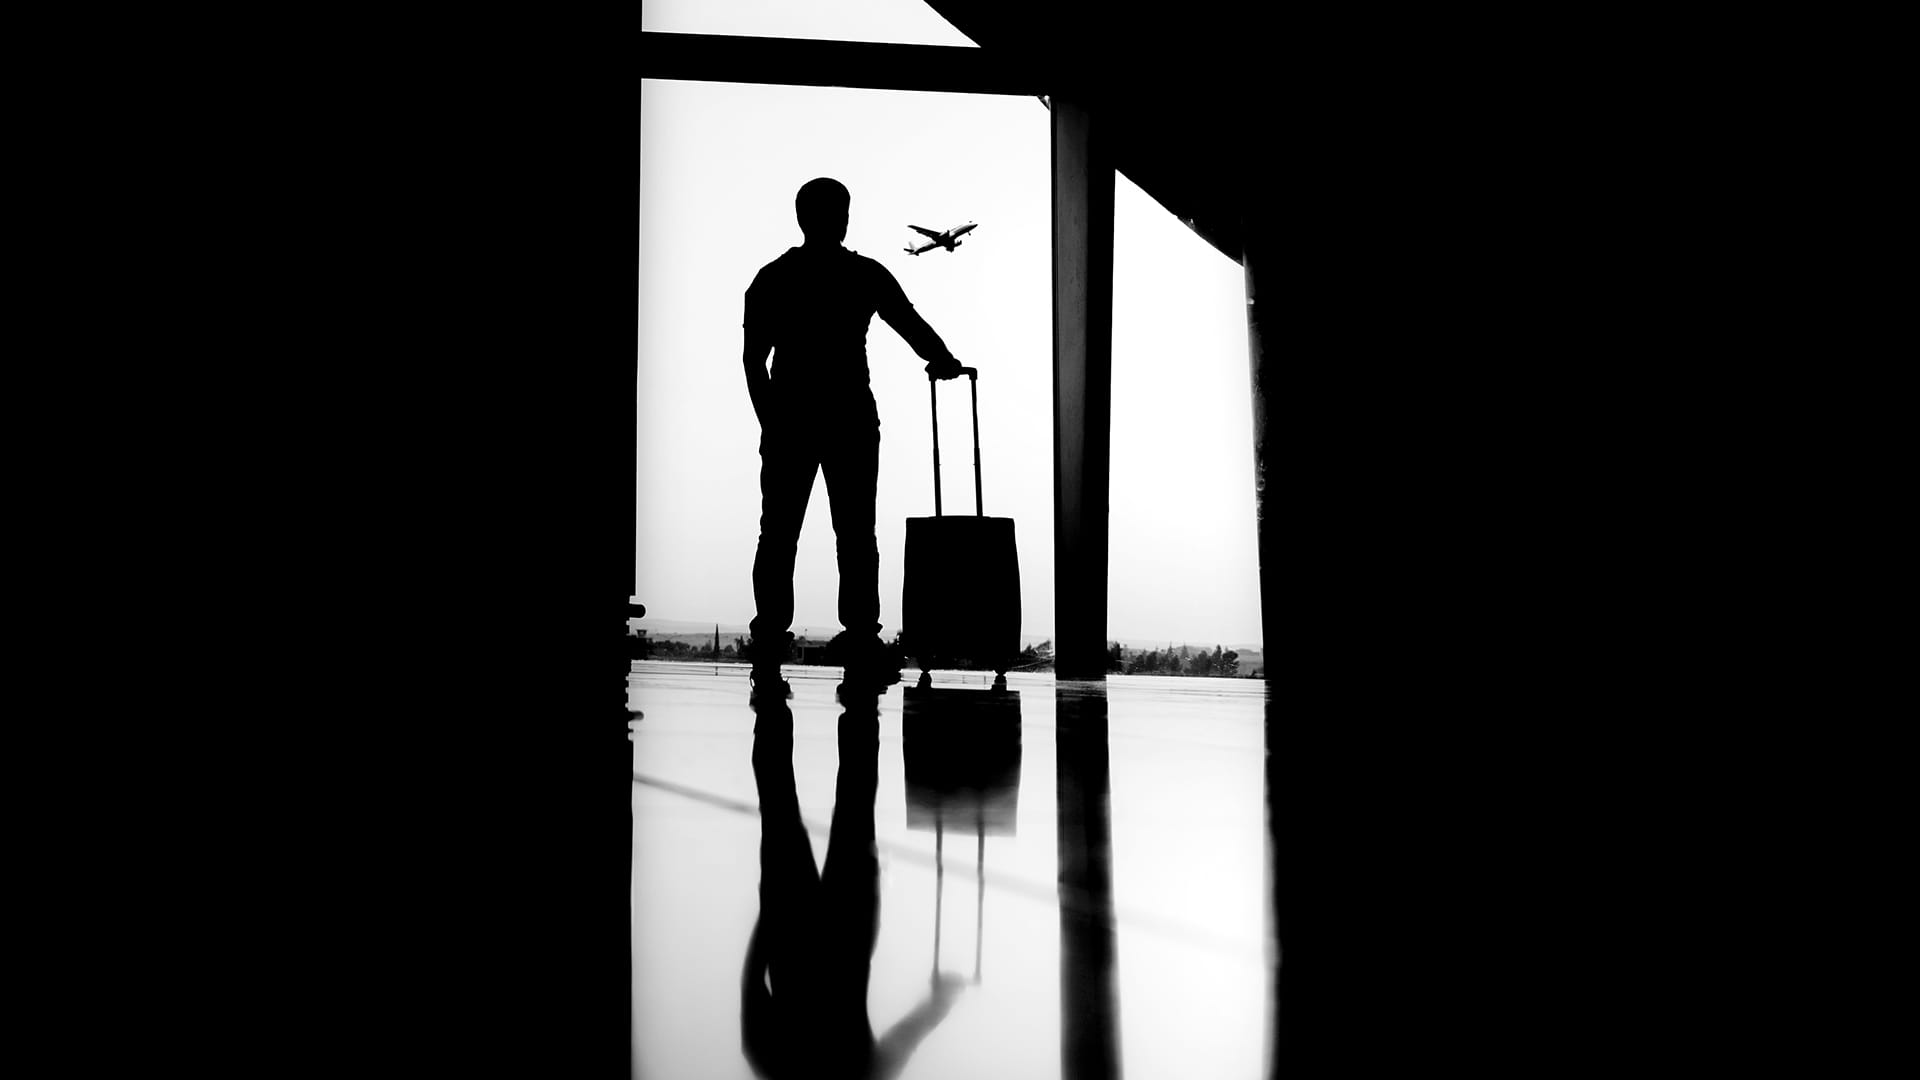 Airport traveler silhouette